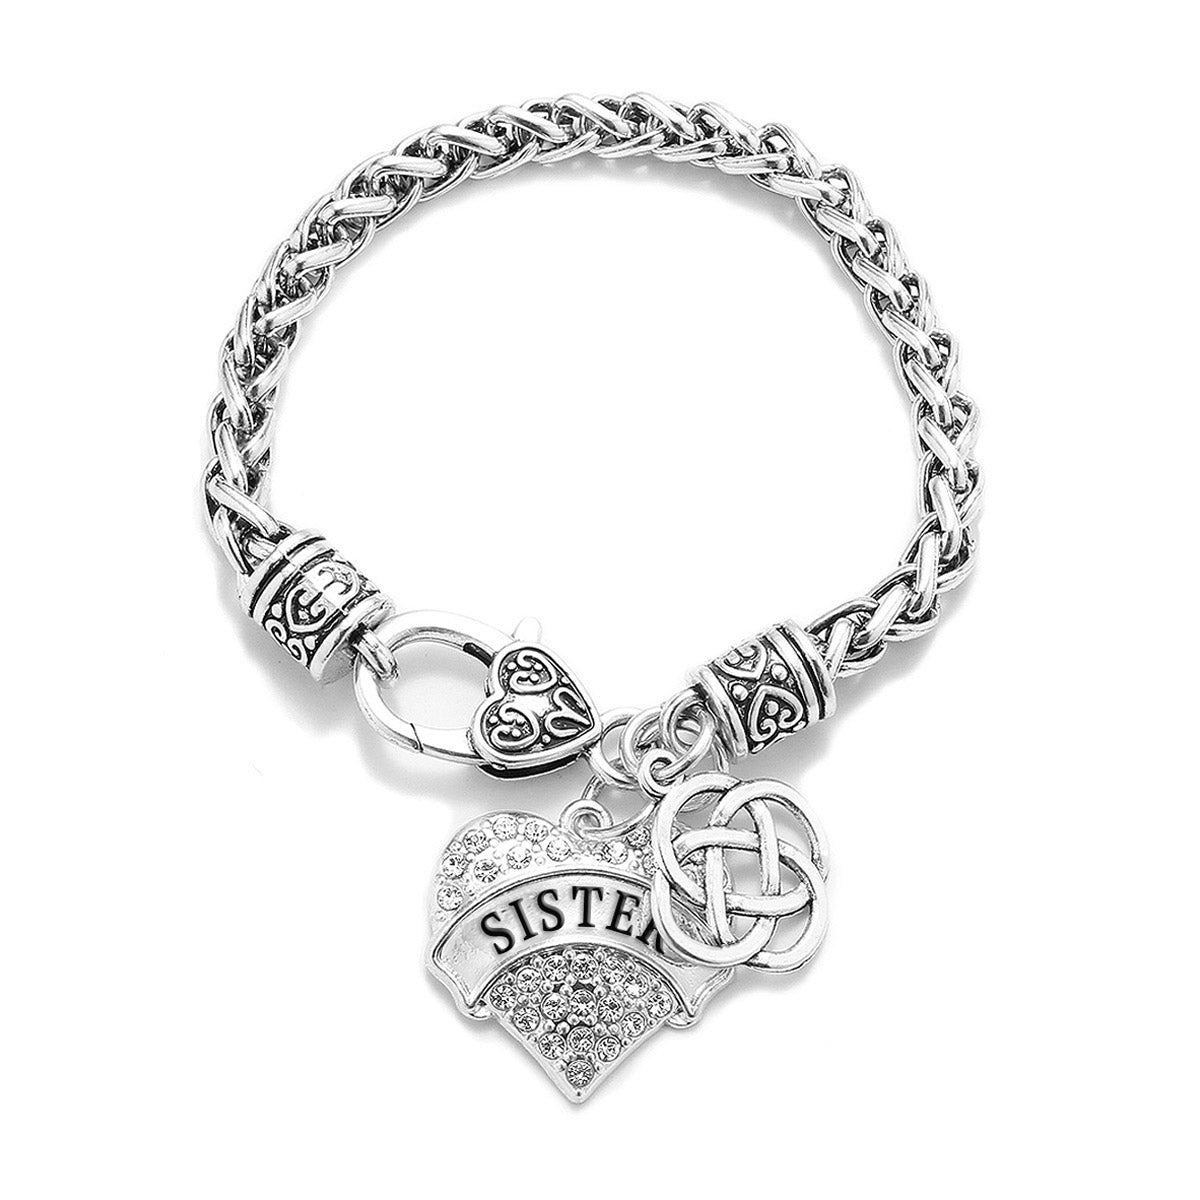 Silver Sister Celtic Knot Pave Heart Charm Braided Bracelet